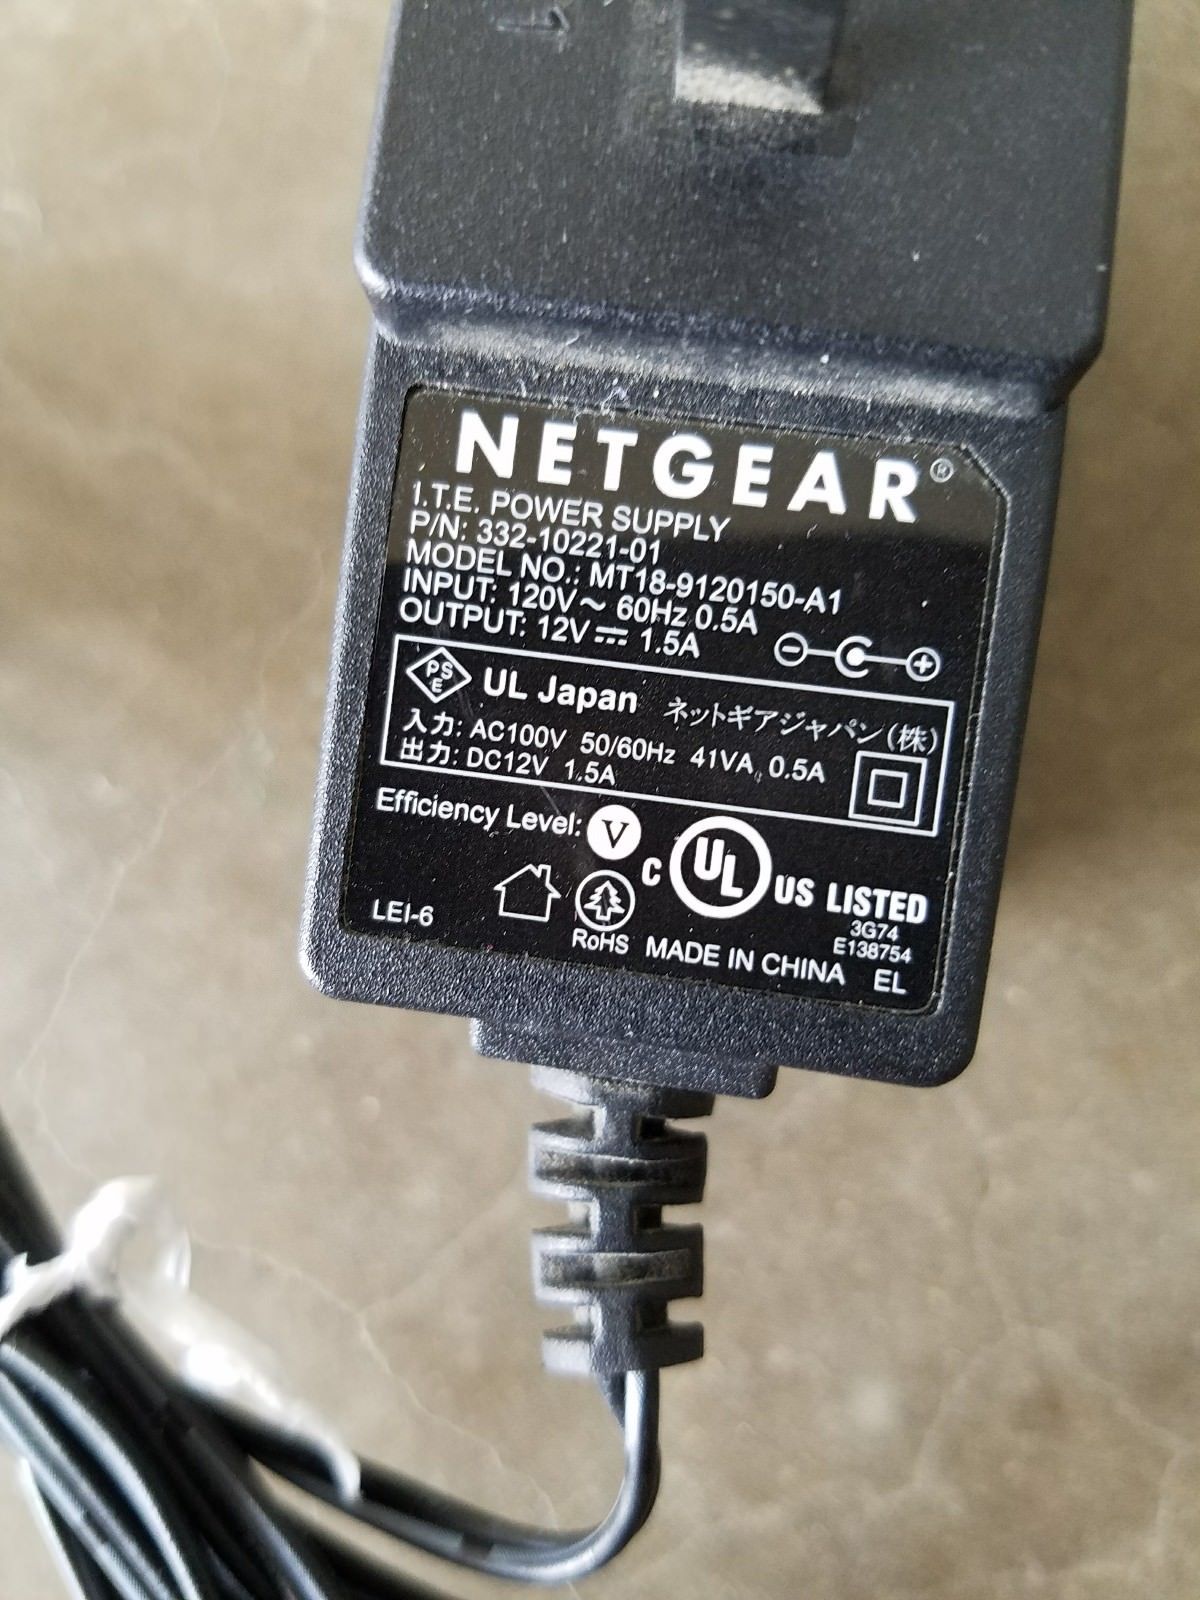 New Netgear 332-10221-01 MT18-9120150-A1 Power Supply 12V DC 1.5A ac adpater